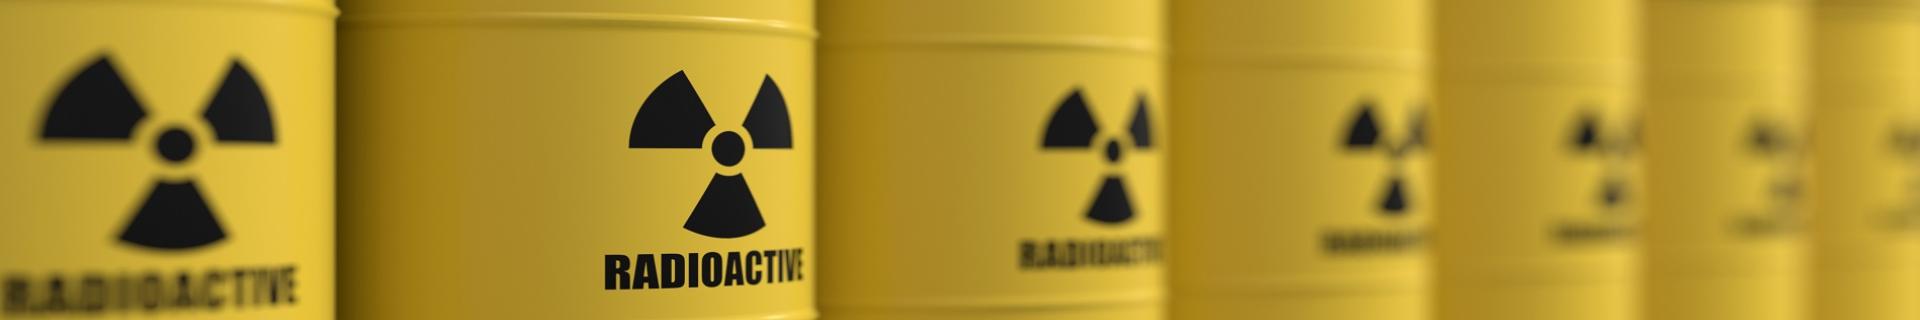 Handling Radioactive Materials